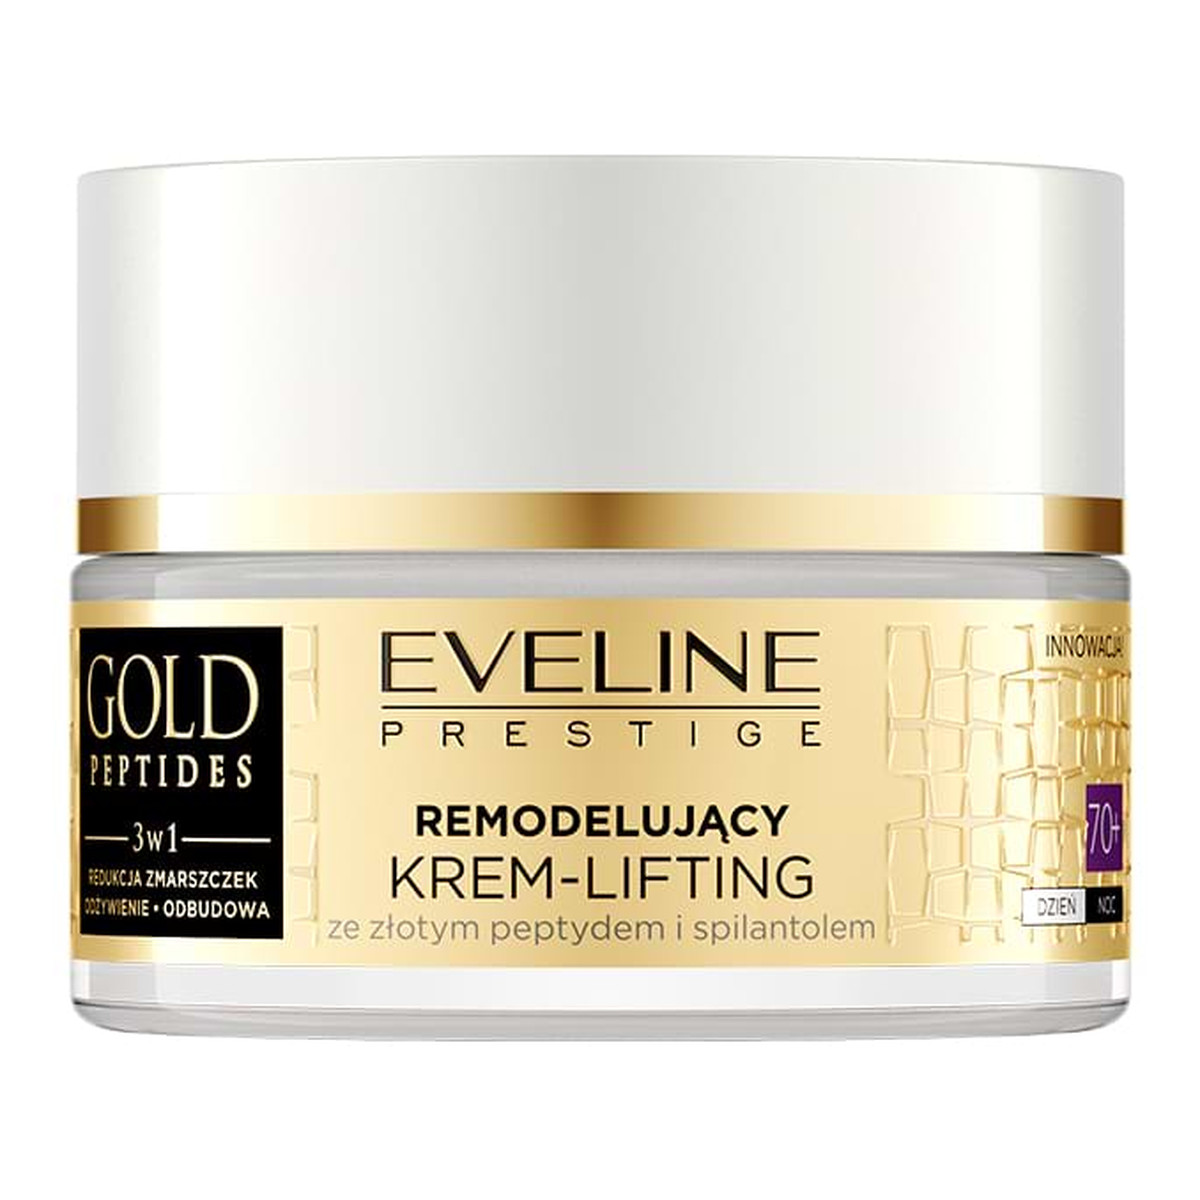 Eveline Gold Peptides Remodelujący krem-lifting 70+na dzień i noc 50ml